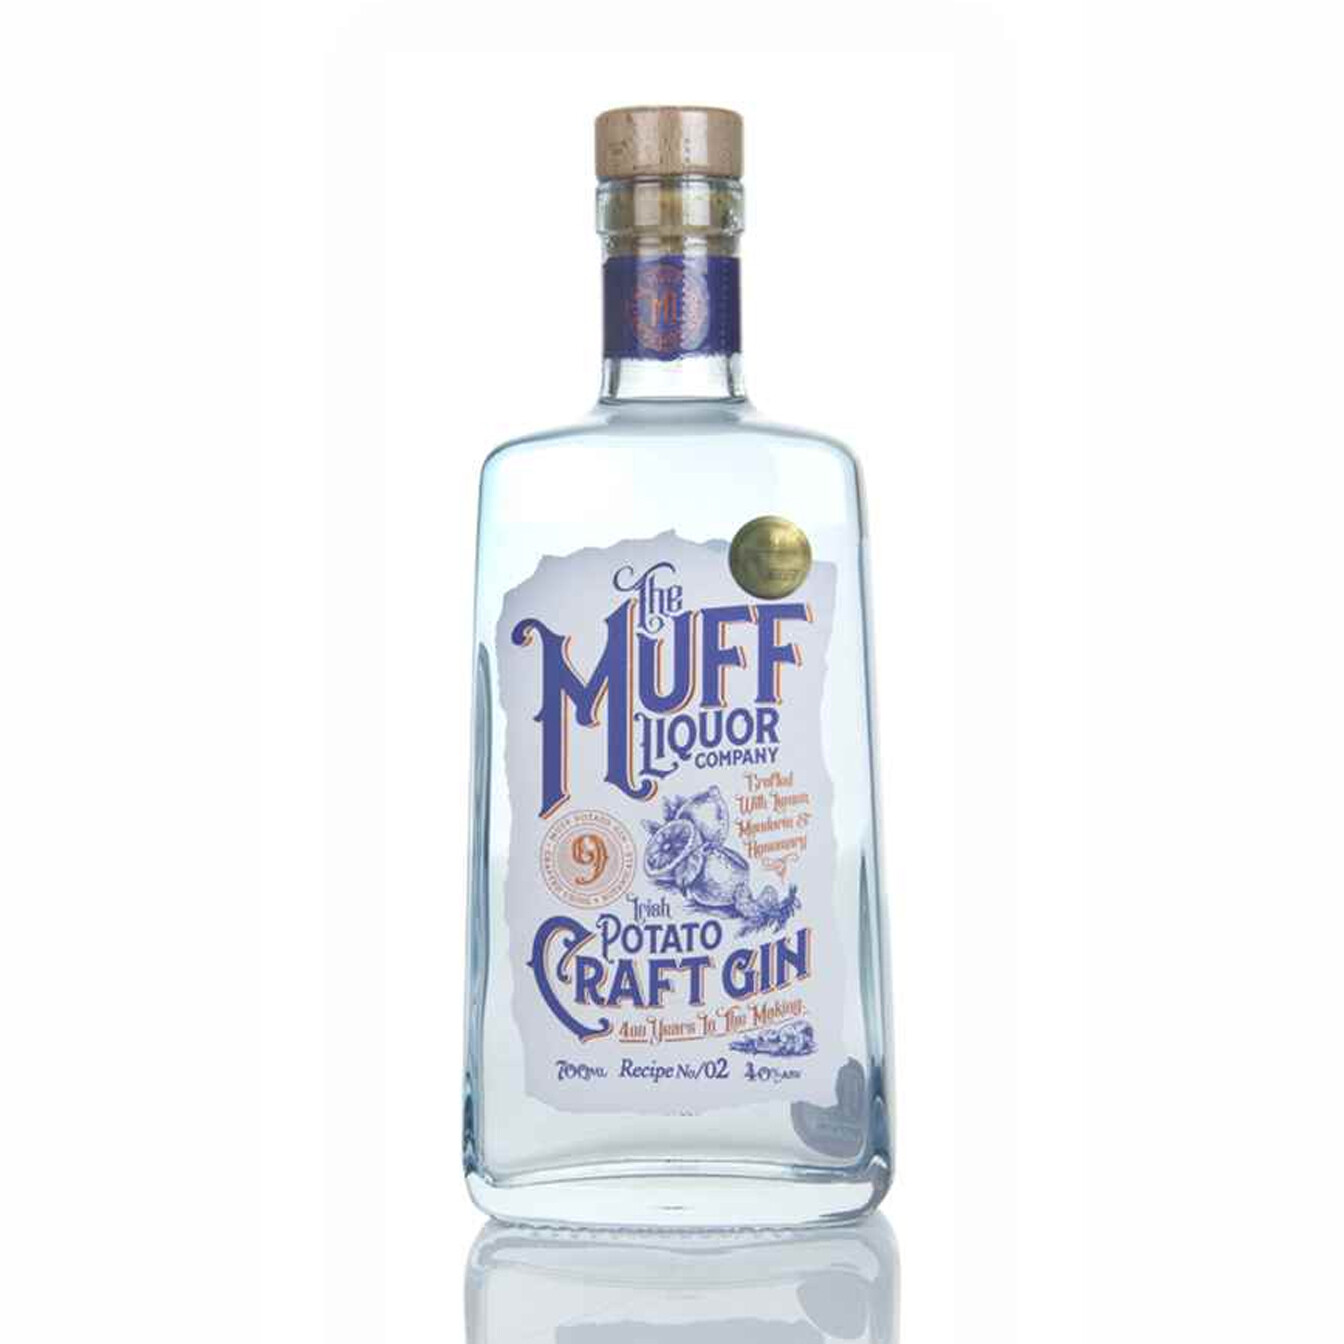 The Muff Liquor Company Craft Gin